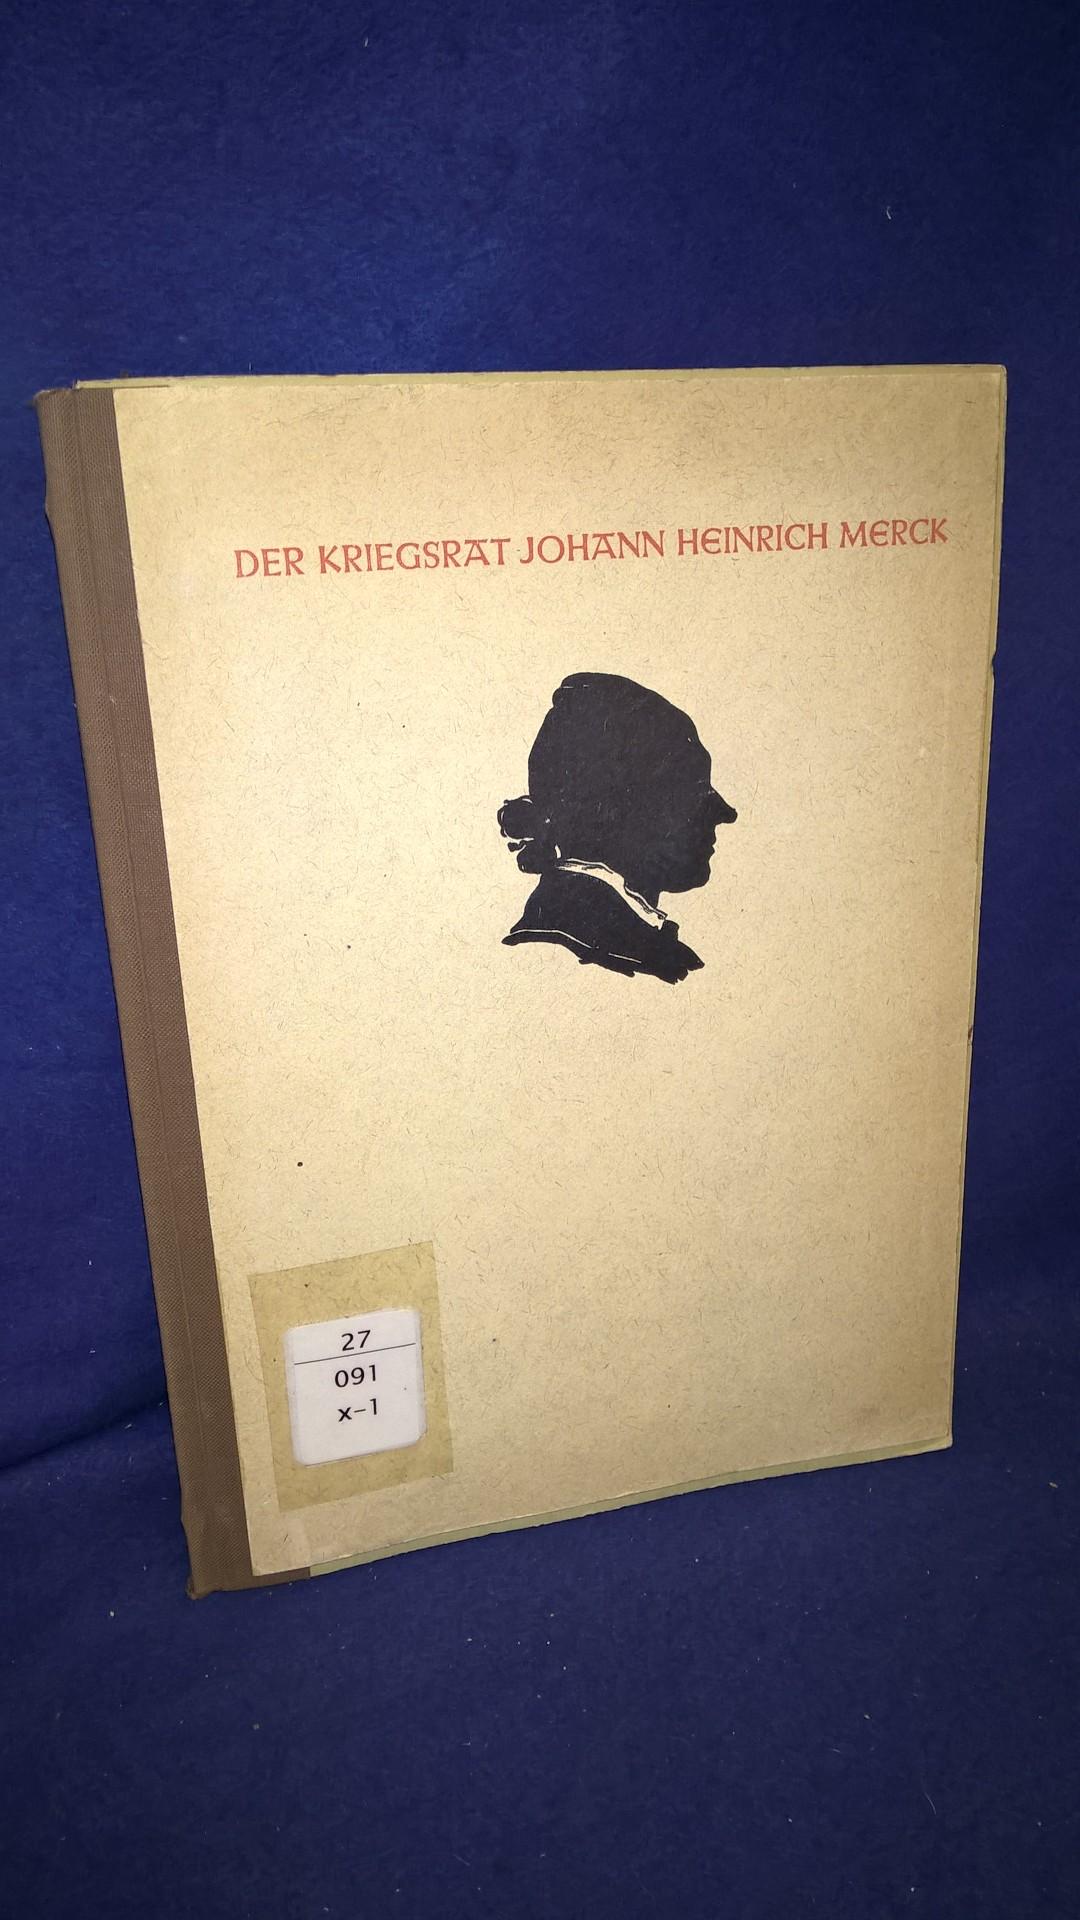 Der Kriegsrat Johann Heinrich Merck